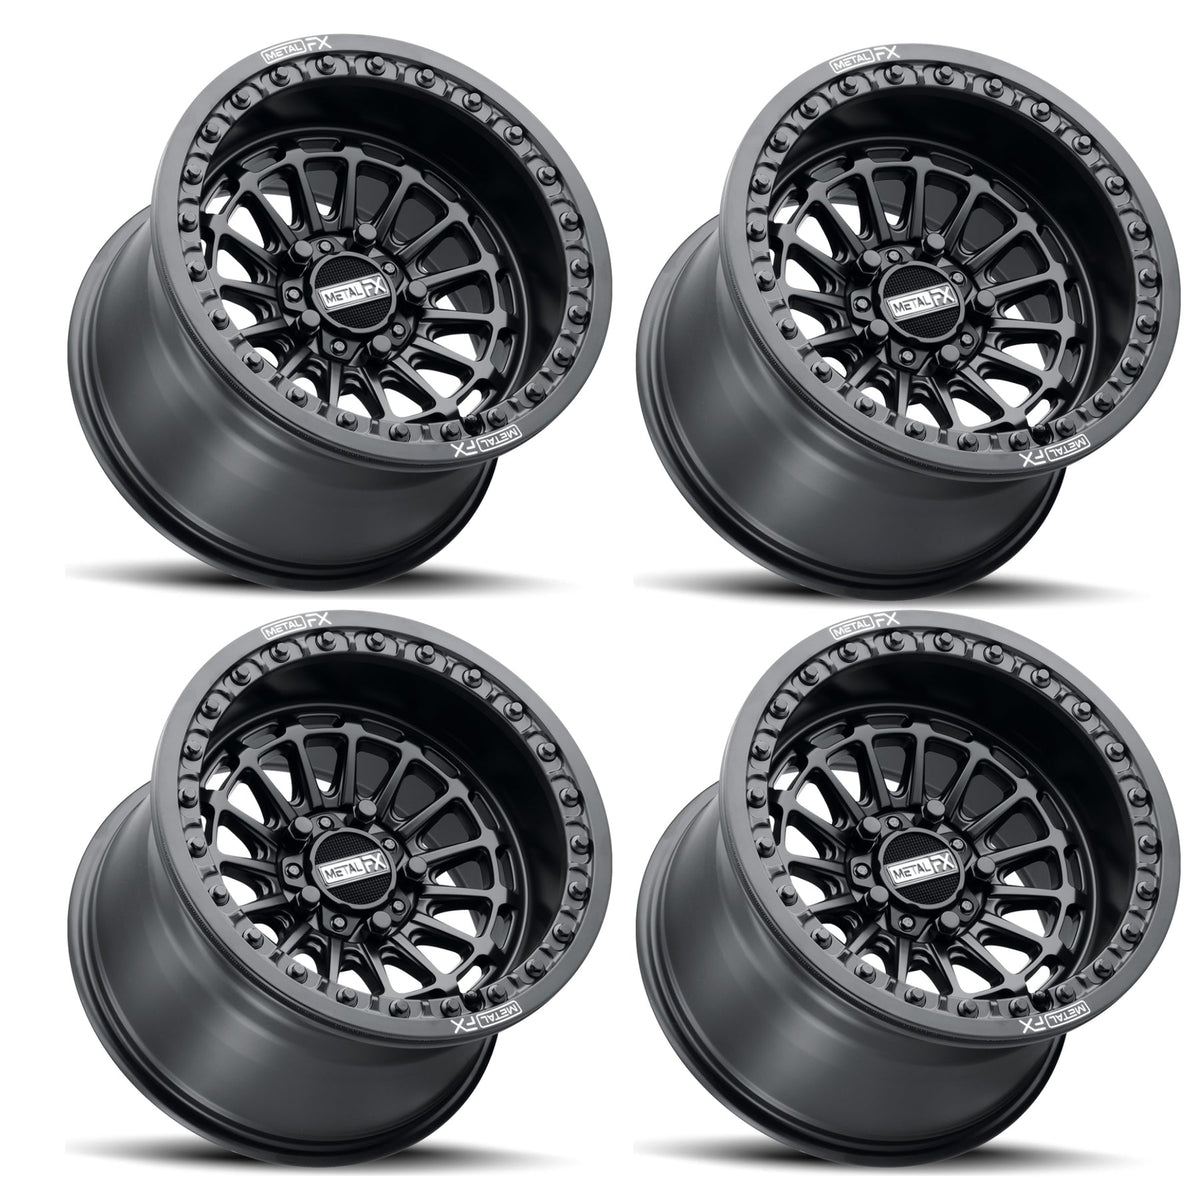 DELTA R BEADLOCK | SATIN BLACK | UTV WHEEL KIT-Wheels-Metal FX Offroad-5x4.5 (5x114.3) | Polaris Pro R / Turbo R / Xpedition-Sand/Dunes - 15x7 (5+2) / 15x10 (5+5) - (2 of each)-No Spare-Black Market UTV